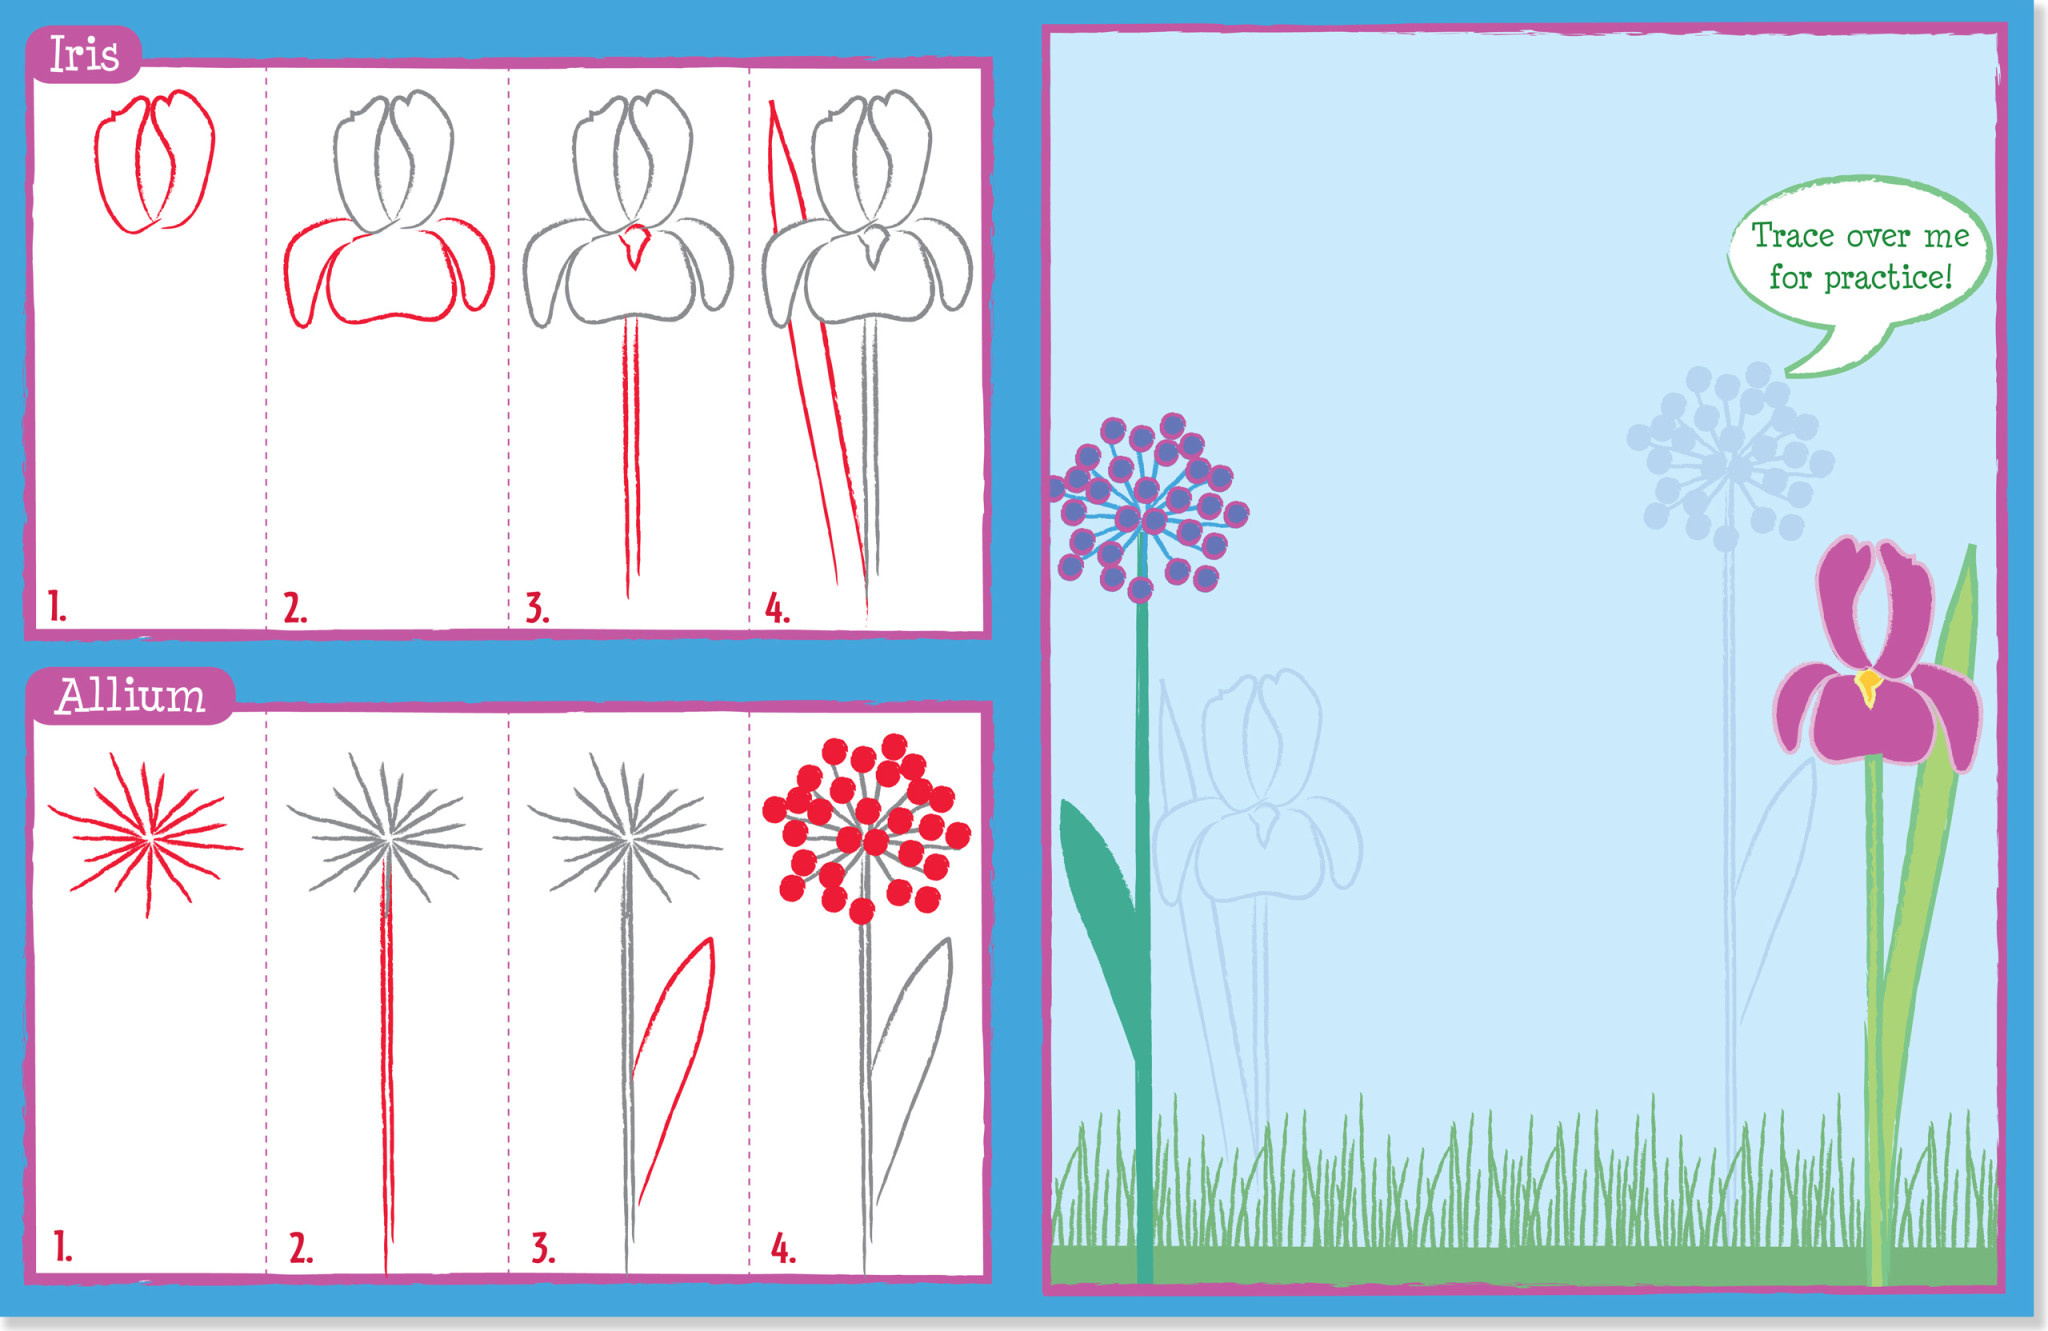 Learn to Draw Flower Garden